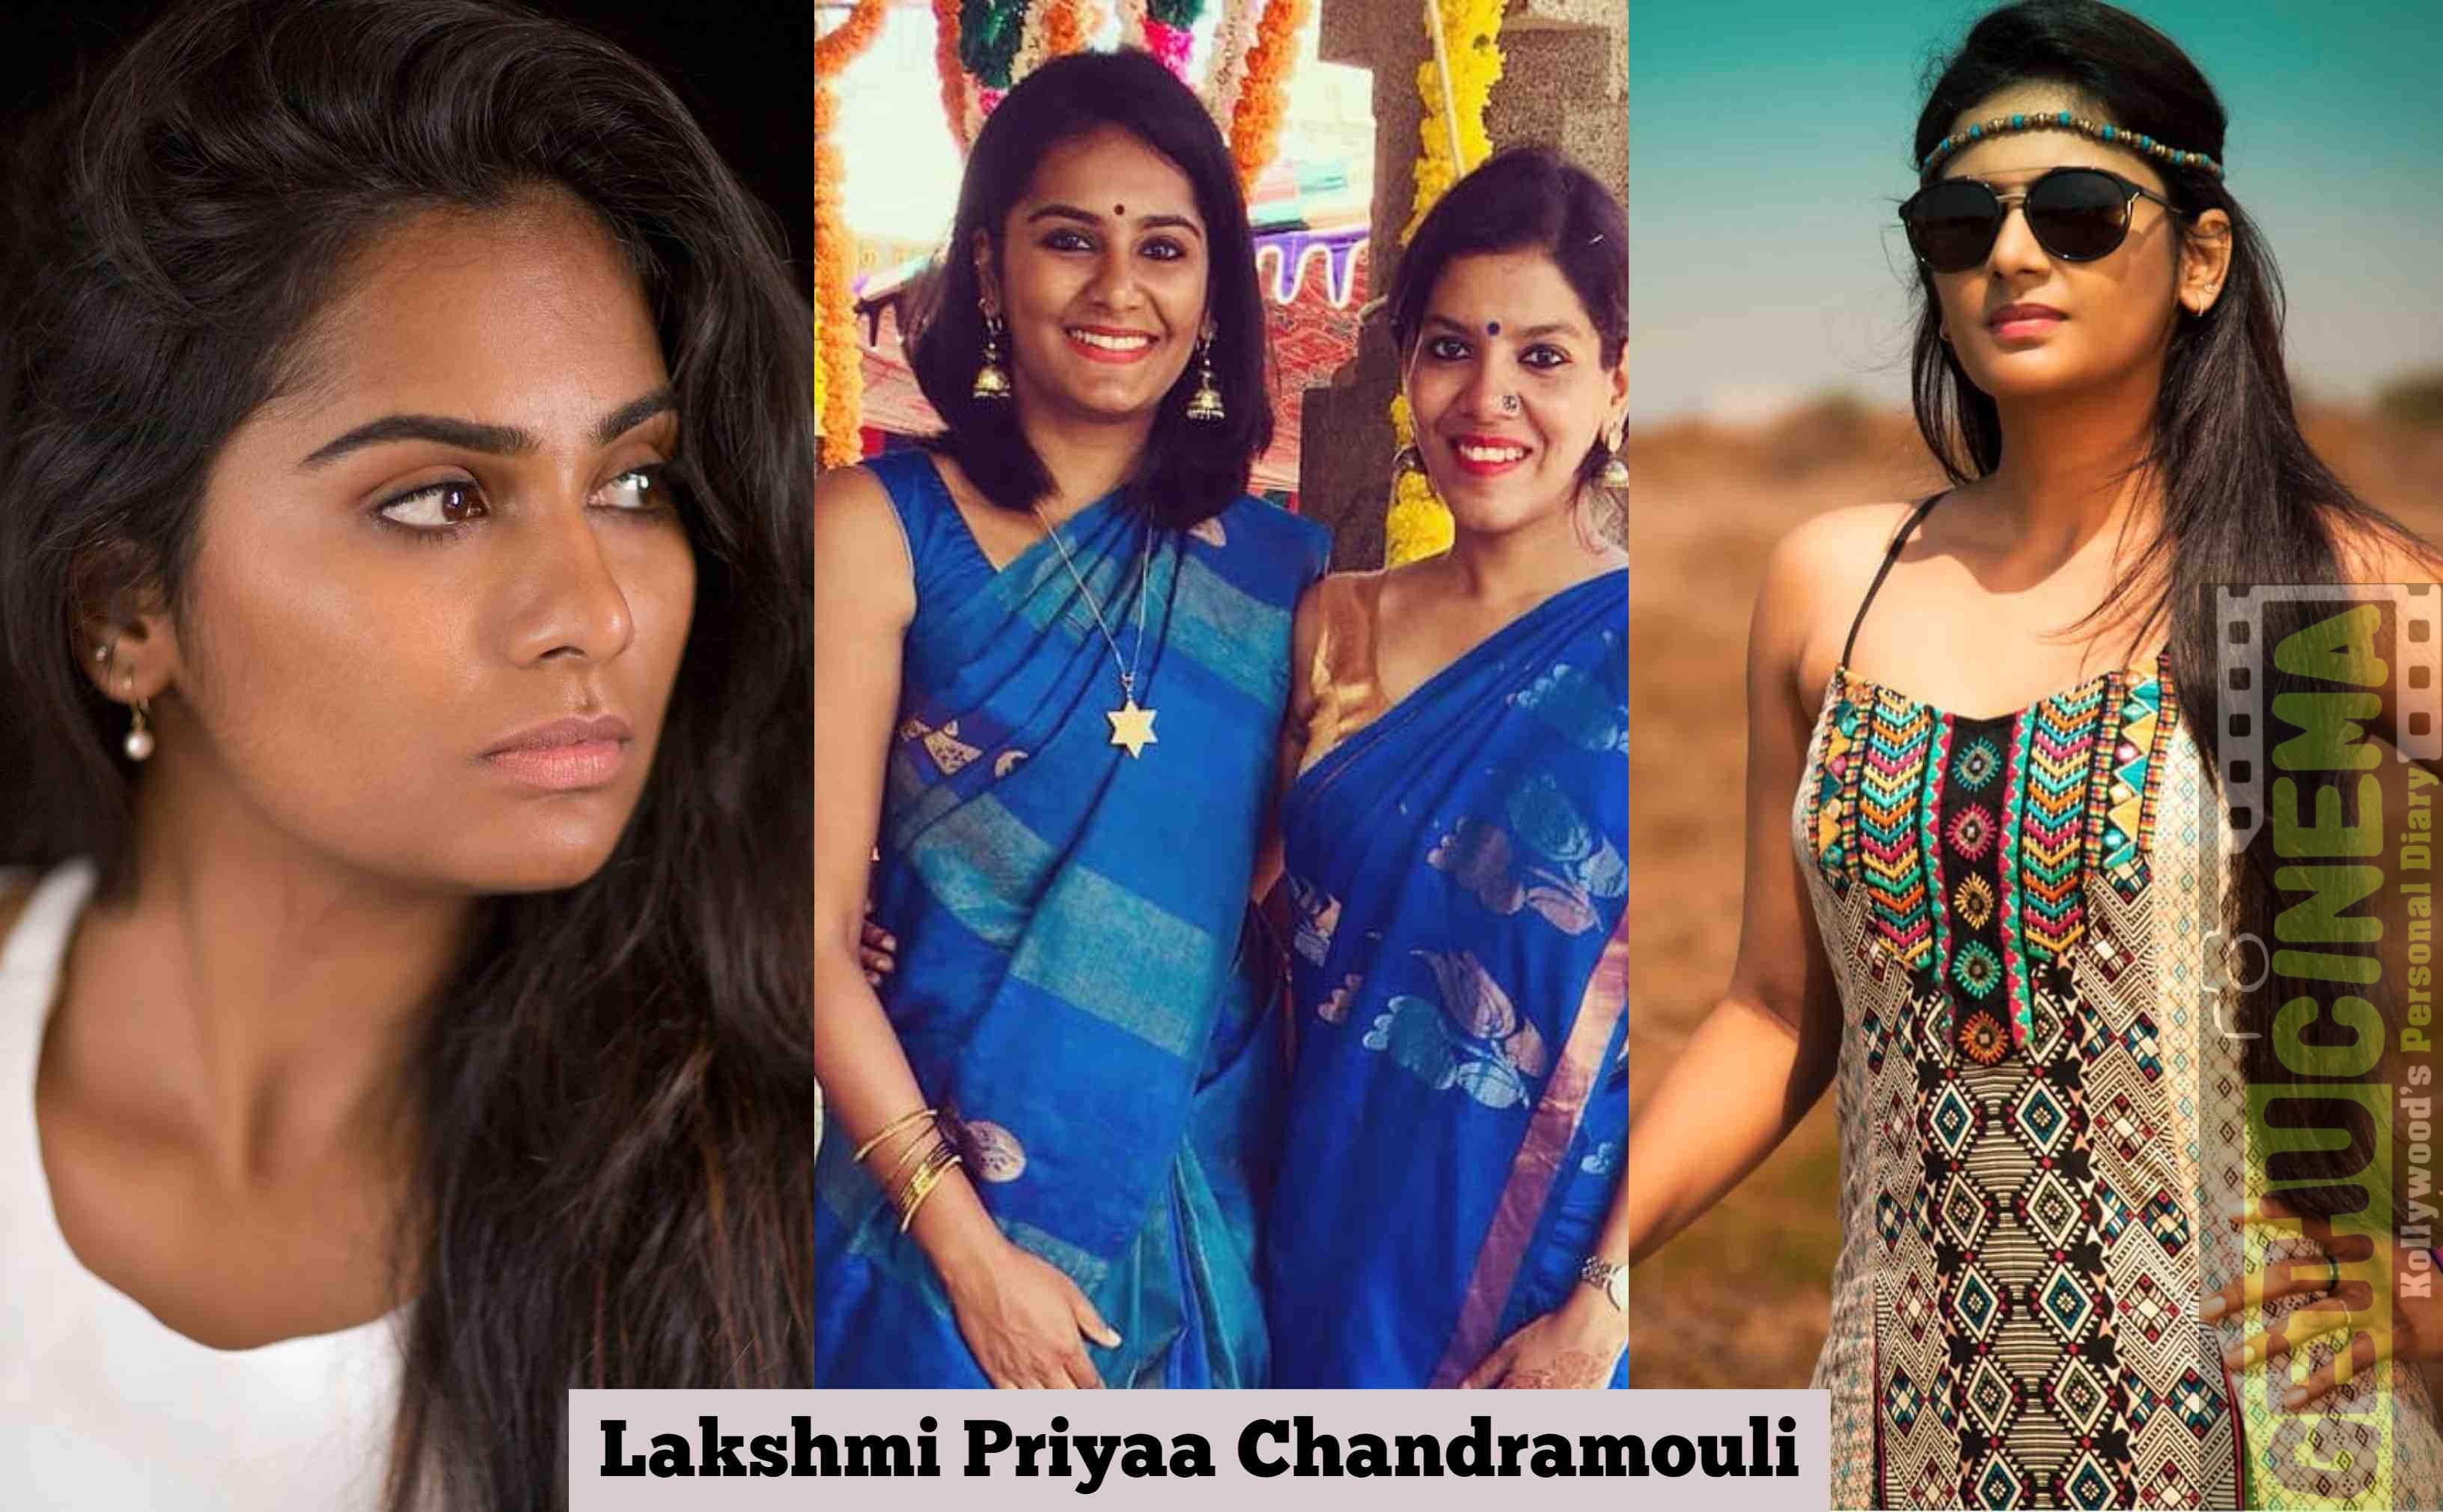 Lakshmi priyaa chandramouli movies